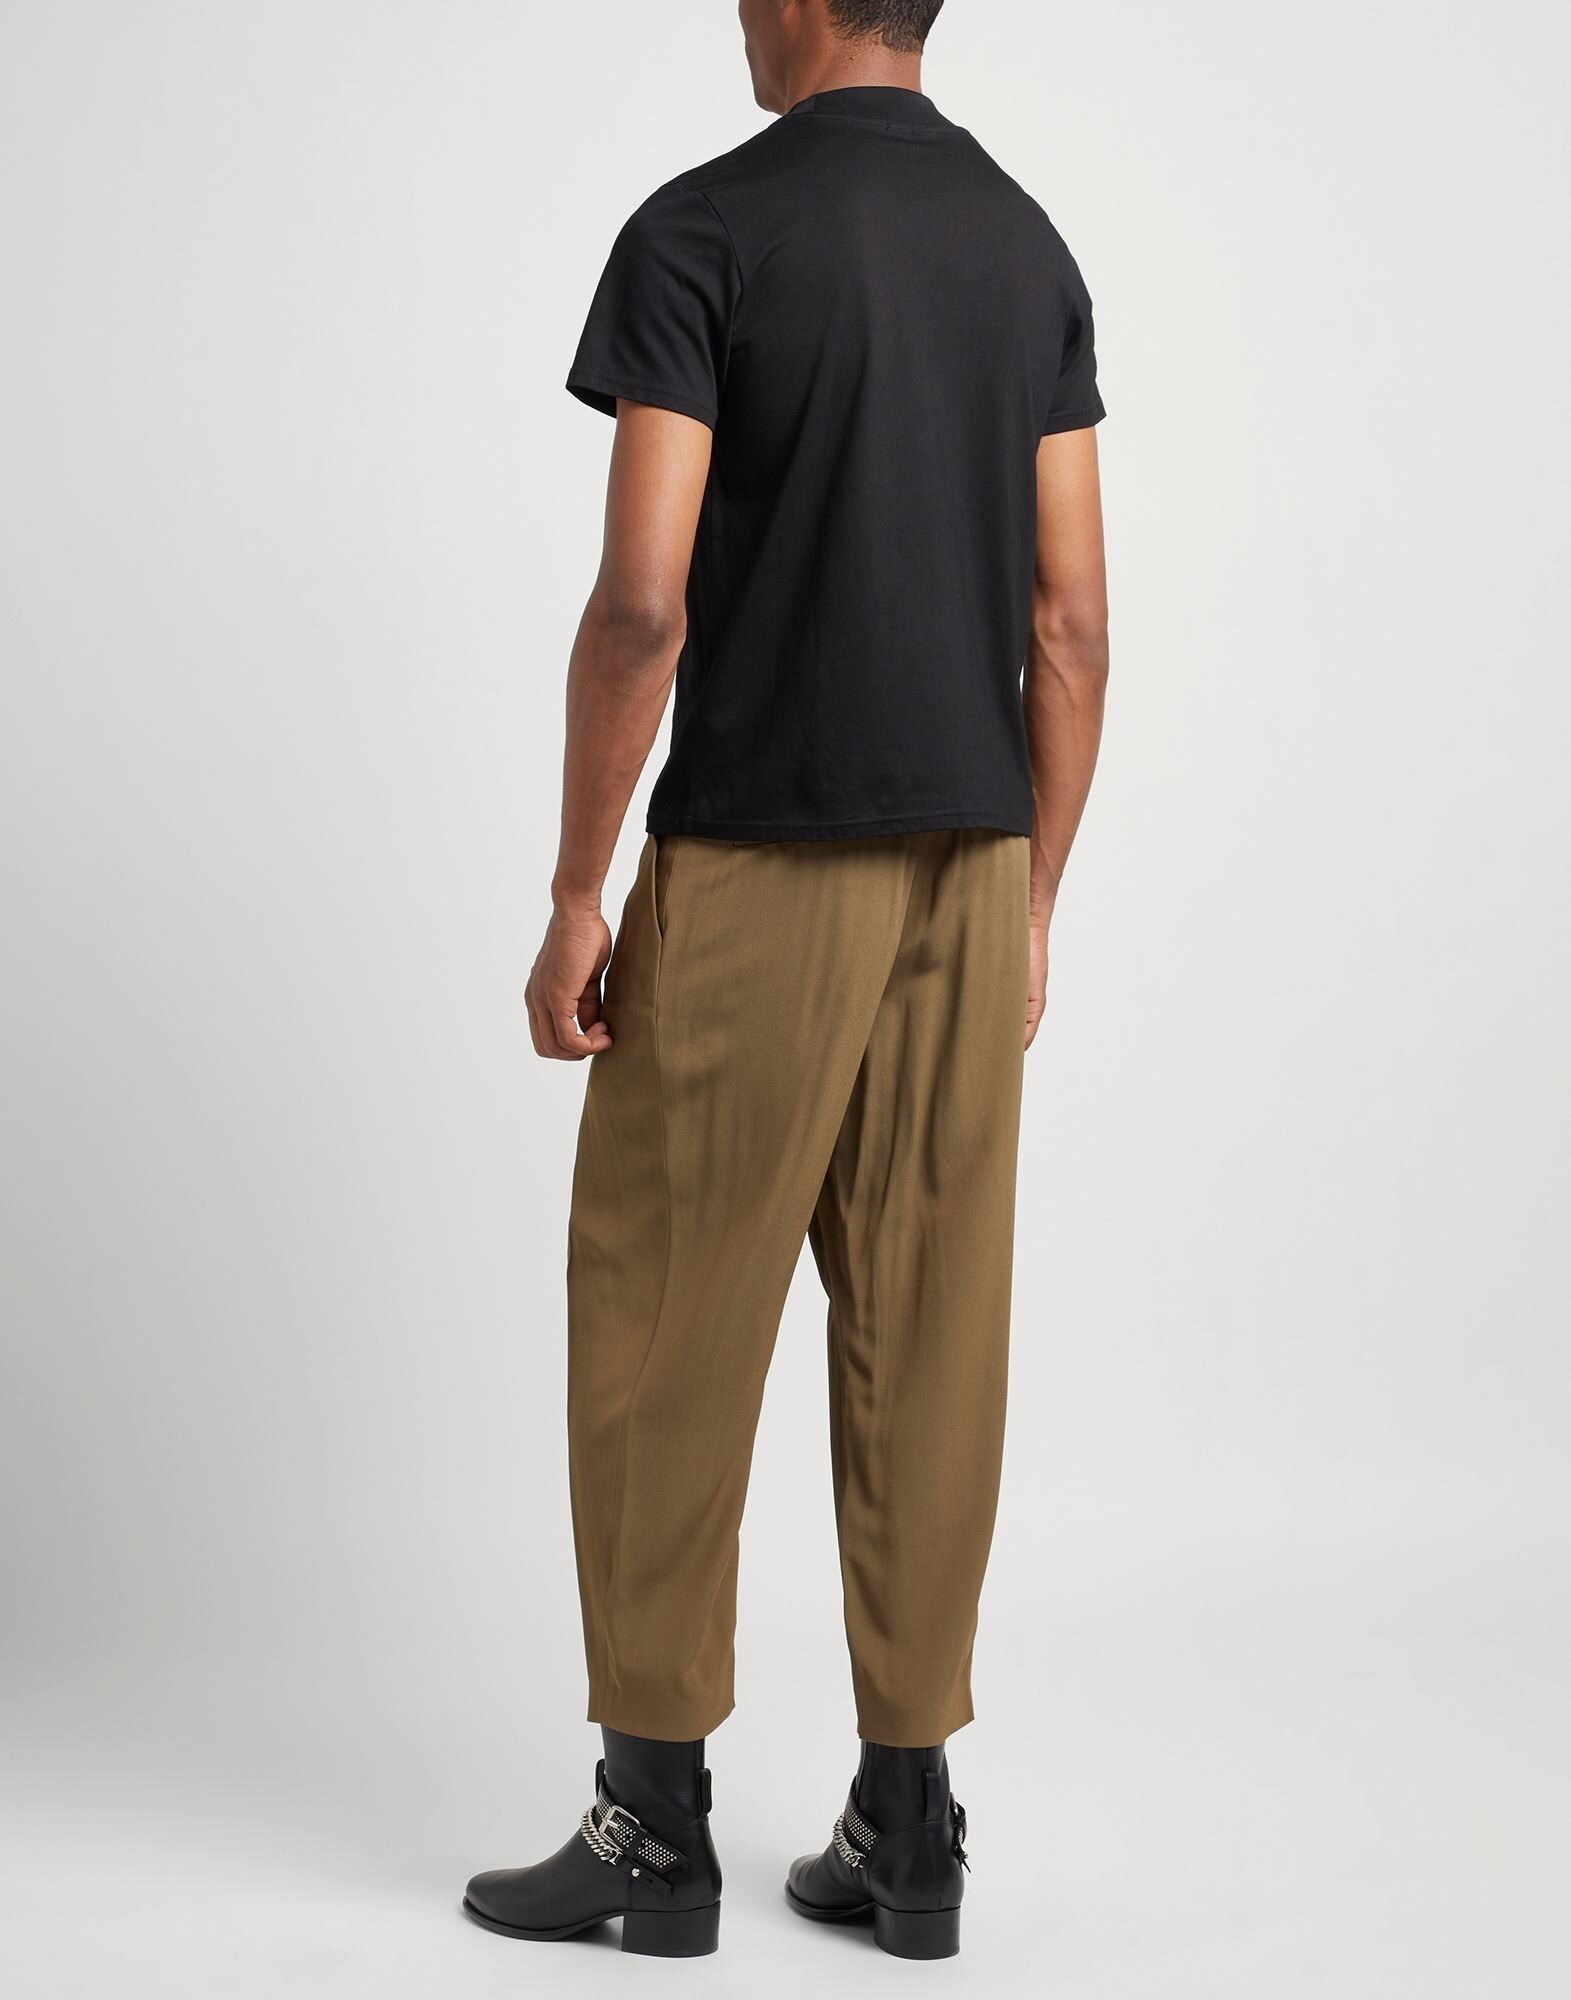 Khaki Men's Casual Pants - 5